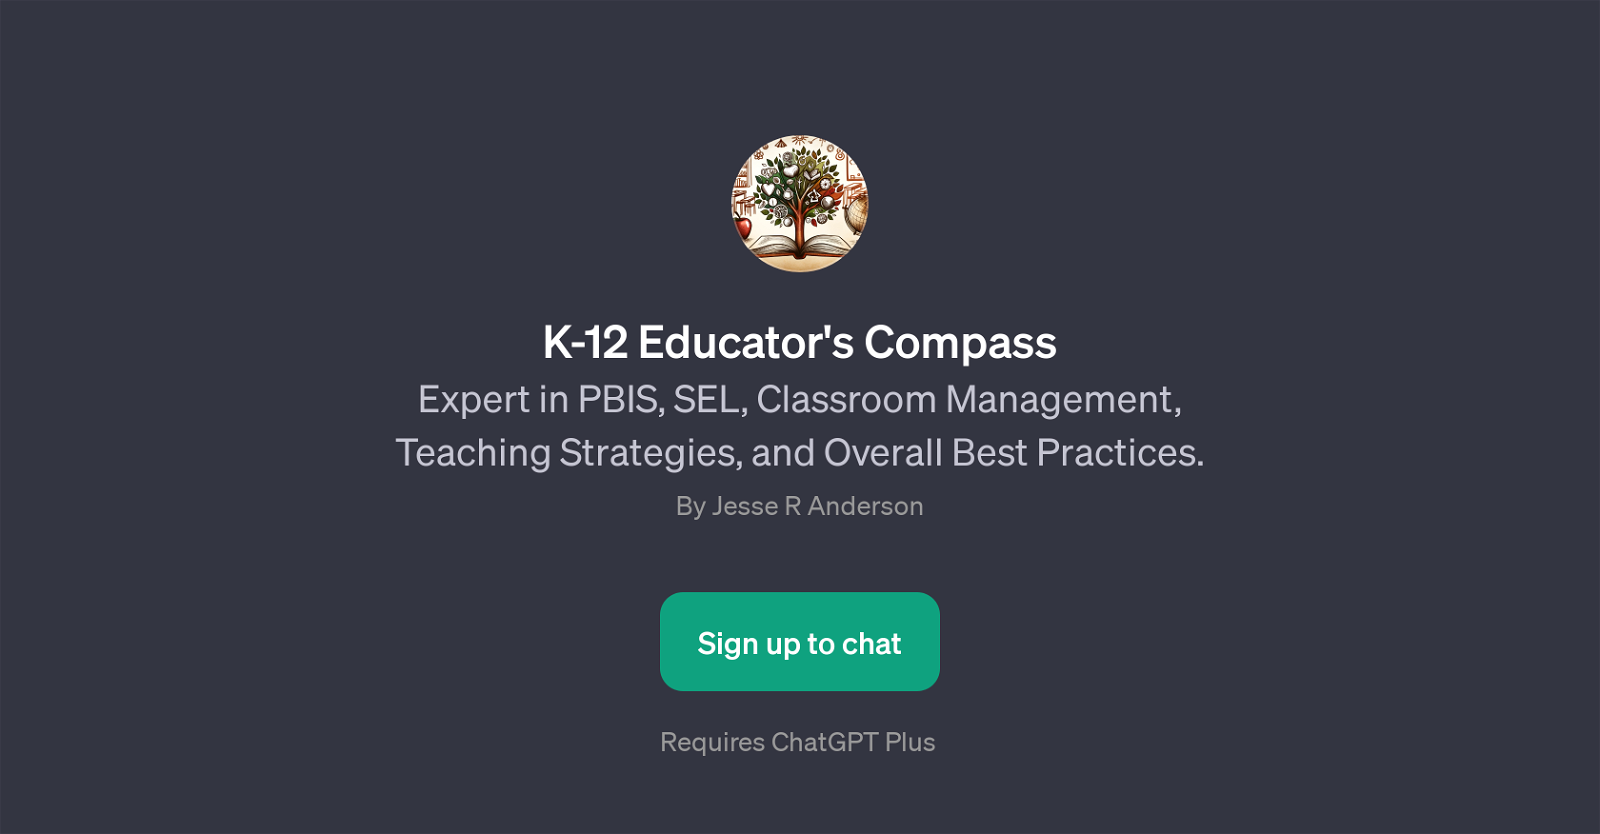 K-12 Educator's Compass website